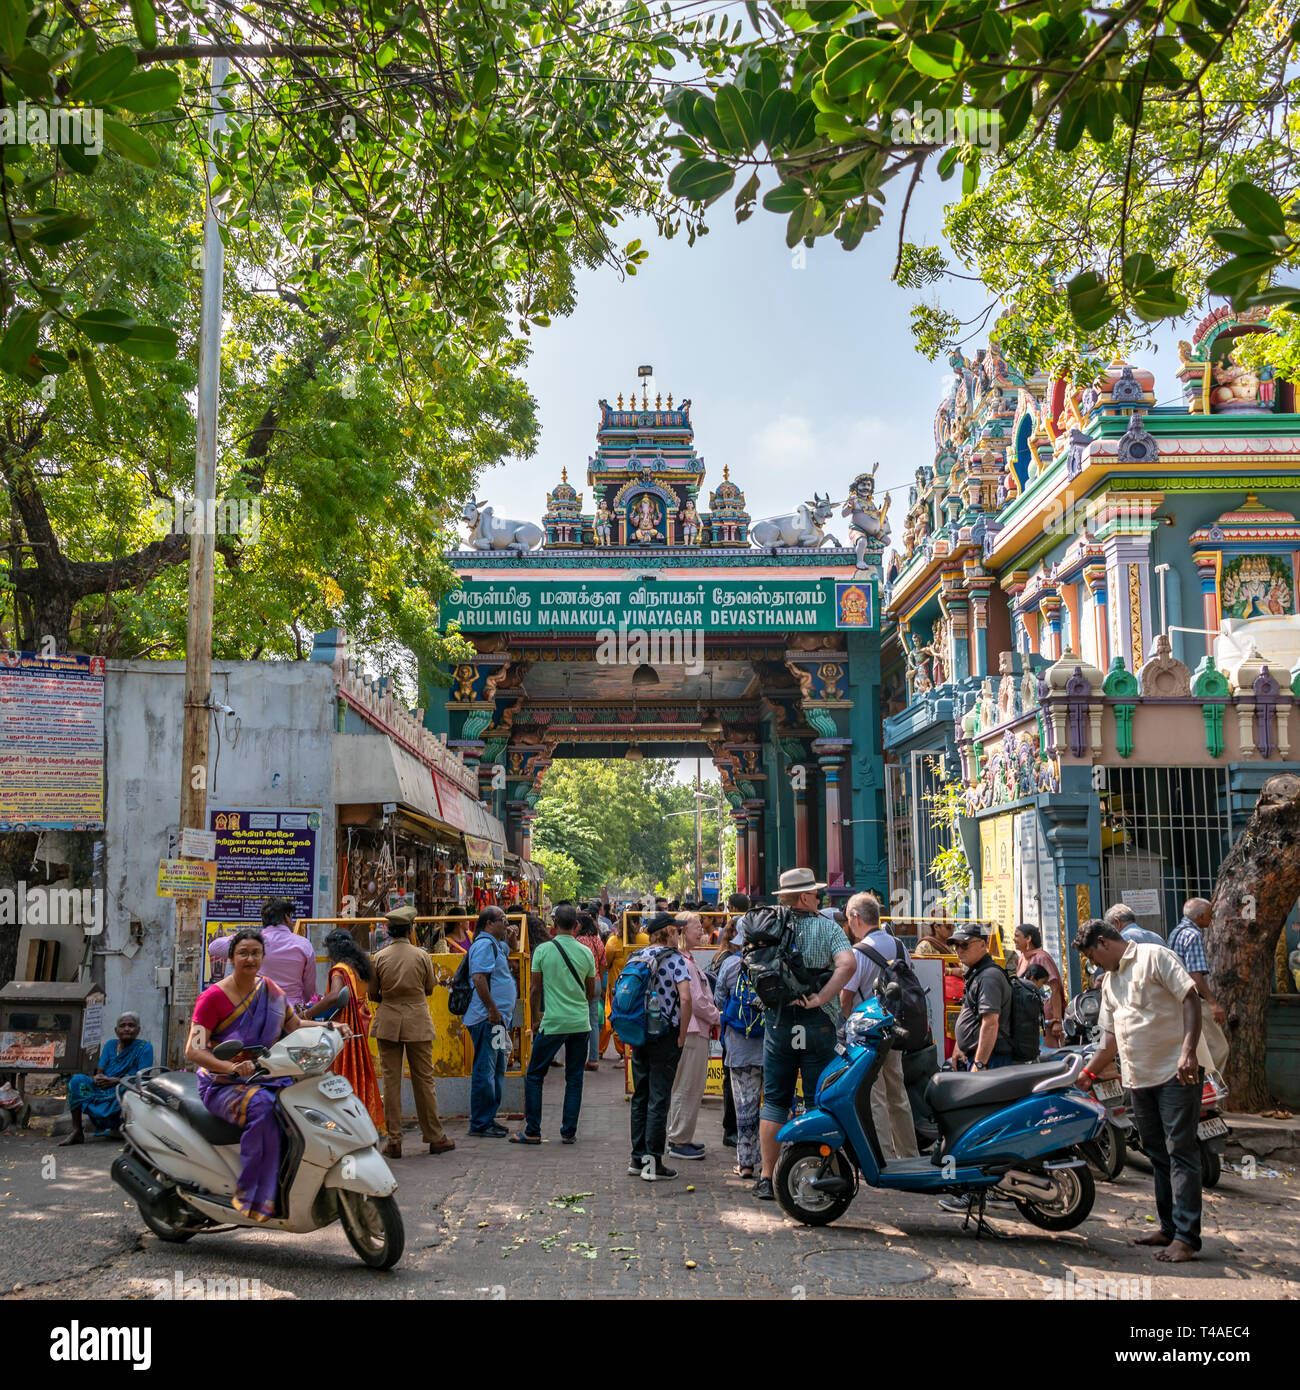 Blick auf den Platz der Manakula Vinyagar Tempel in Pondicherry, Indien. Stockfoto